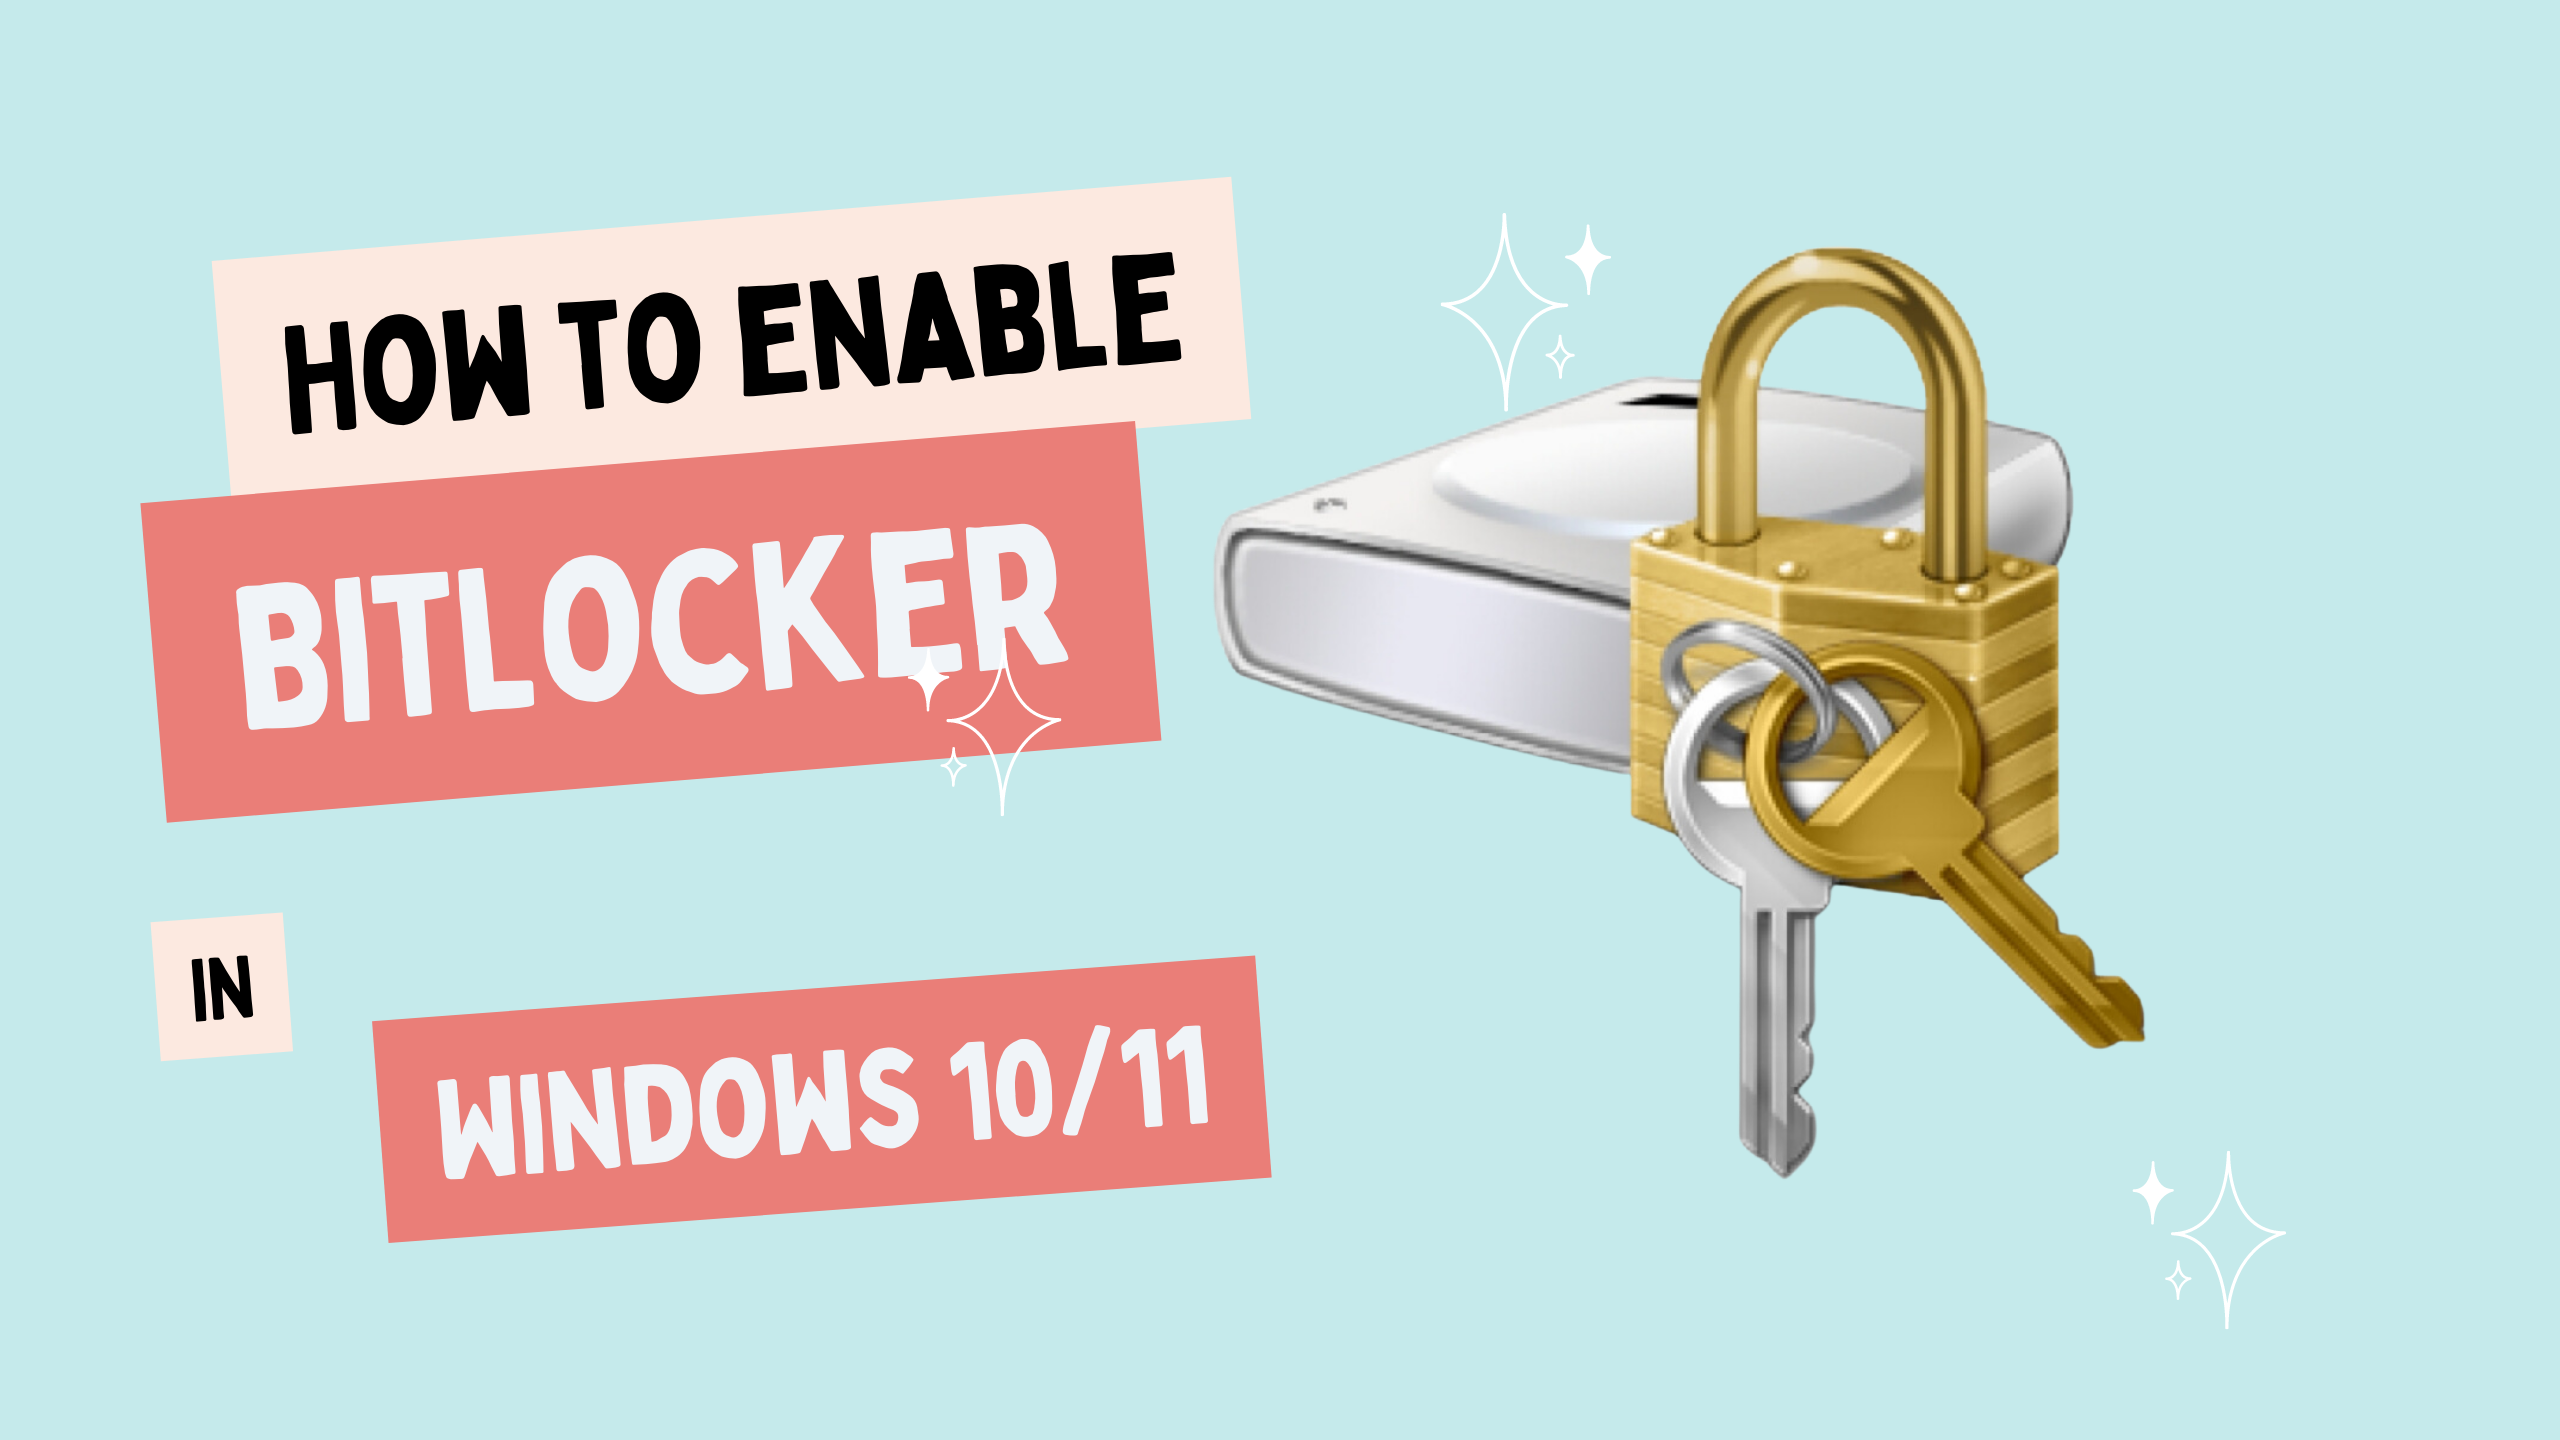 How to enable BitLocker in Windows 10/11